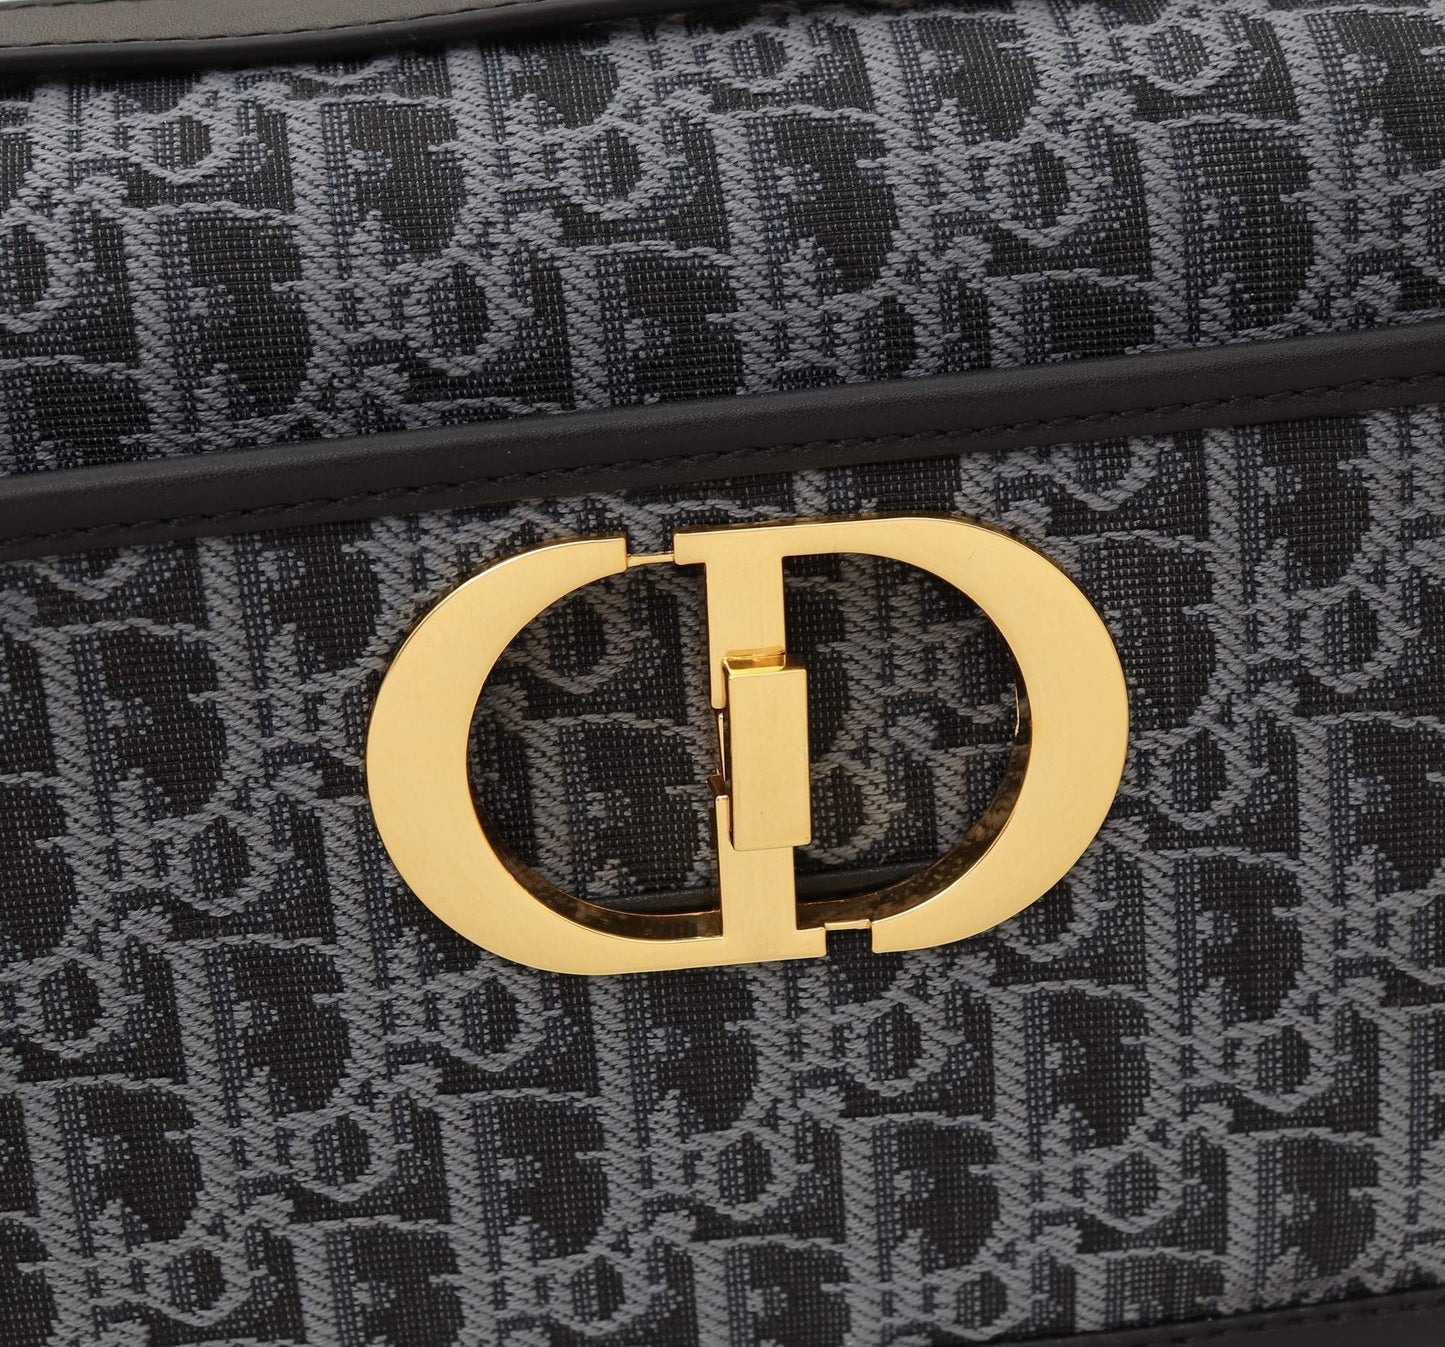 MO - Top Quality Bags Christian Dior 144